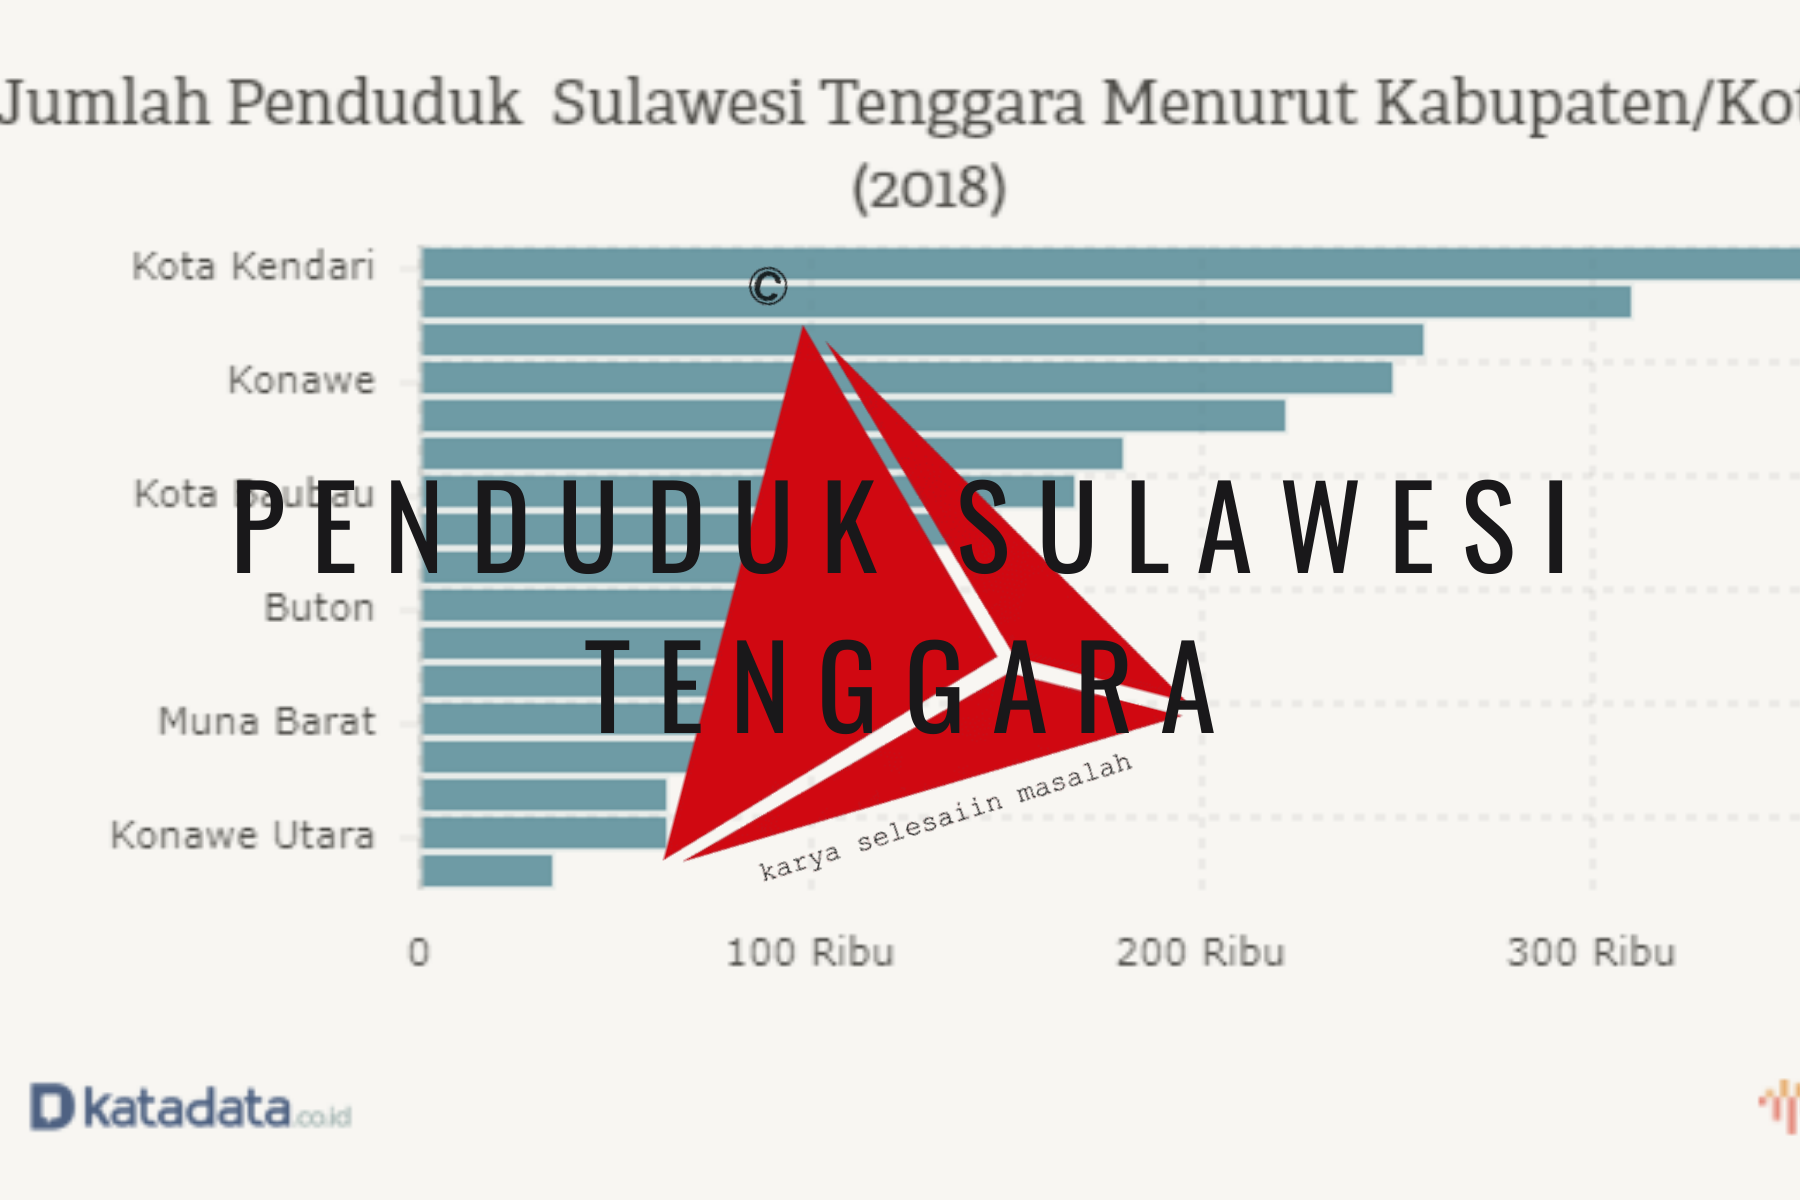 Demografi Penduduk Sulawesi Tenggara